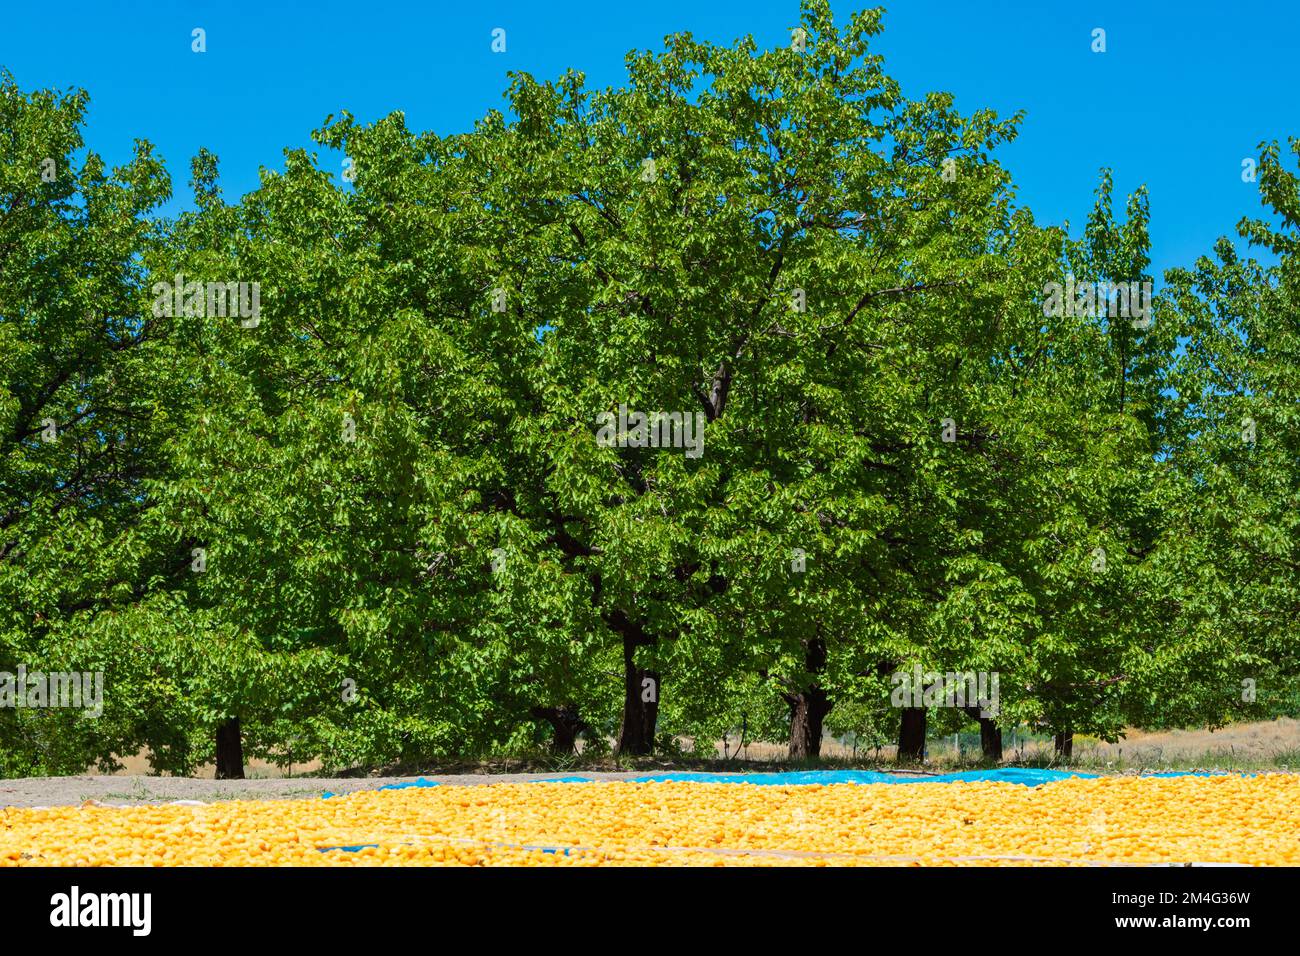 Aprikosenbäume und trocknende Aprikosen auf dem Boden. Aprikosenplantage in Malatya Turkiye. Stockfoto